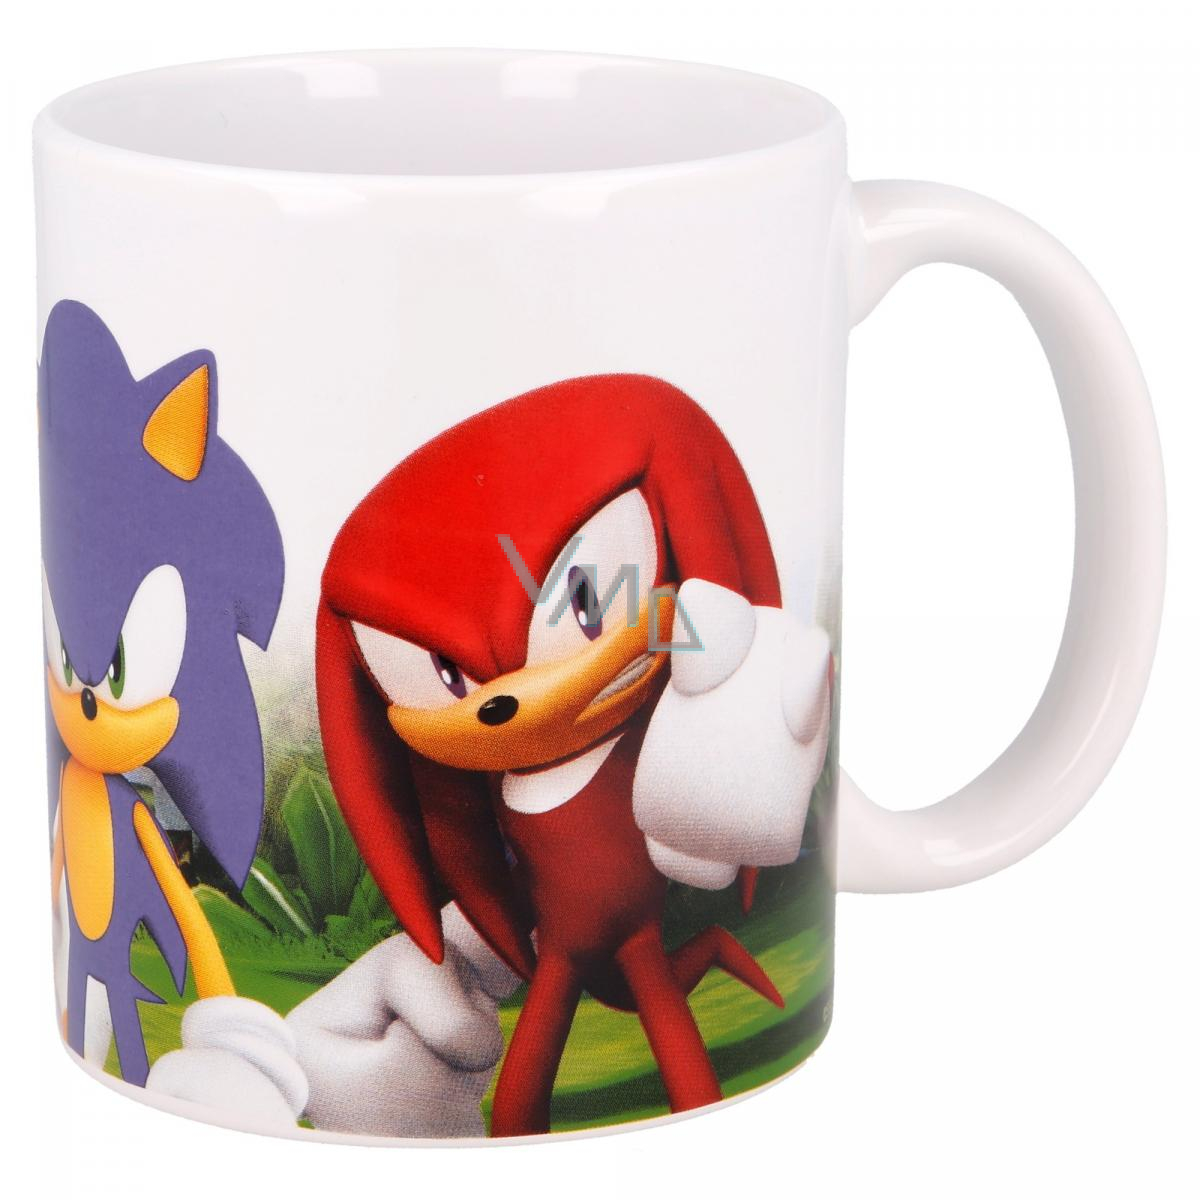 Sonic the Hedgehog - Sonic, Tails, Knuckles, and Egghead 11oz Mug